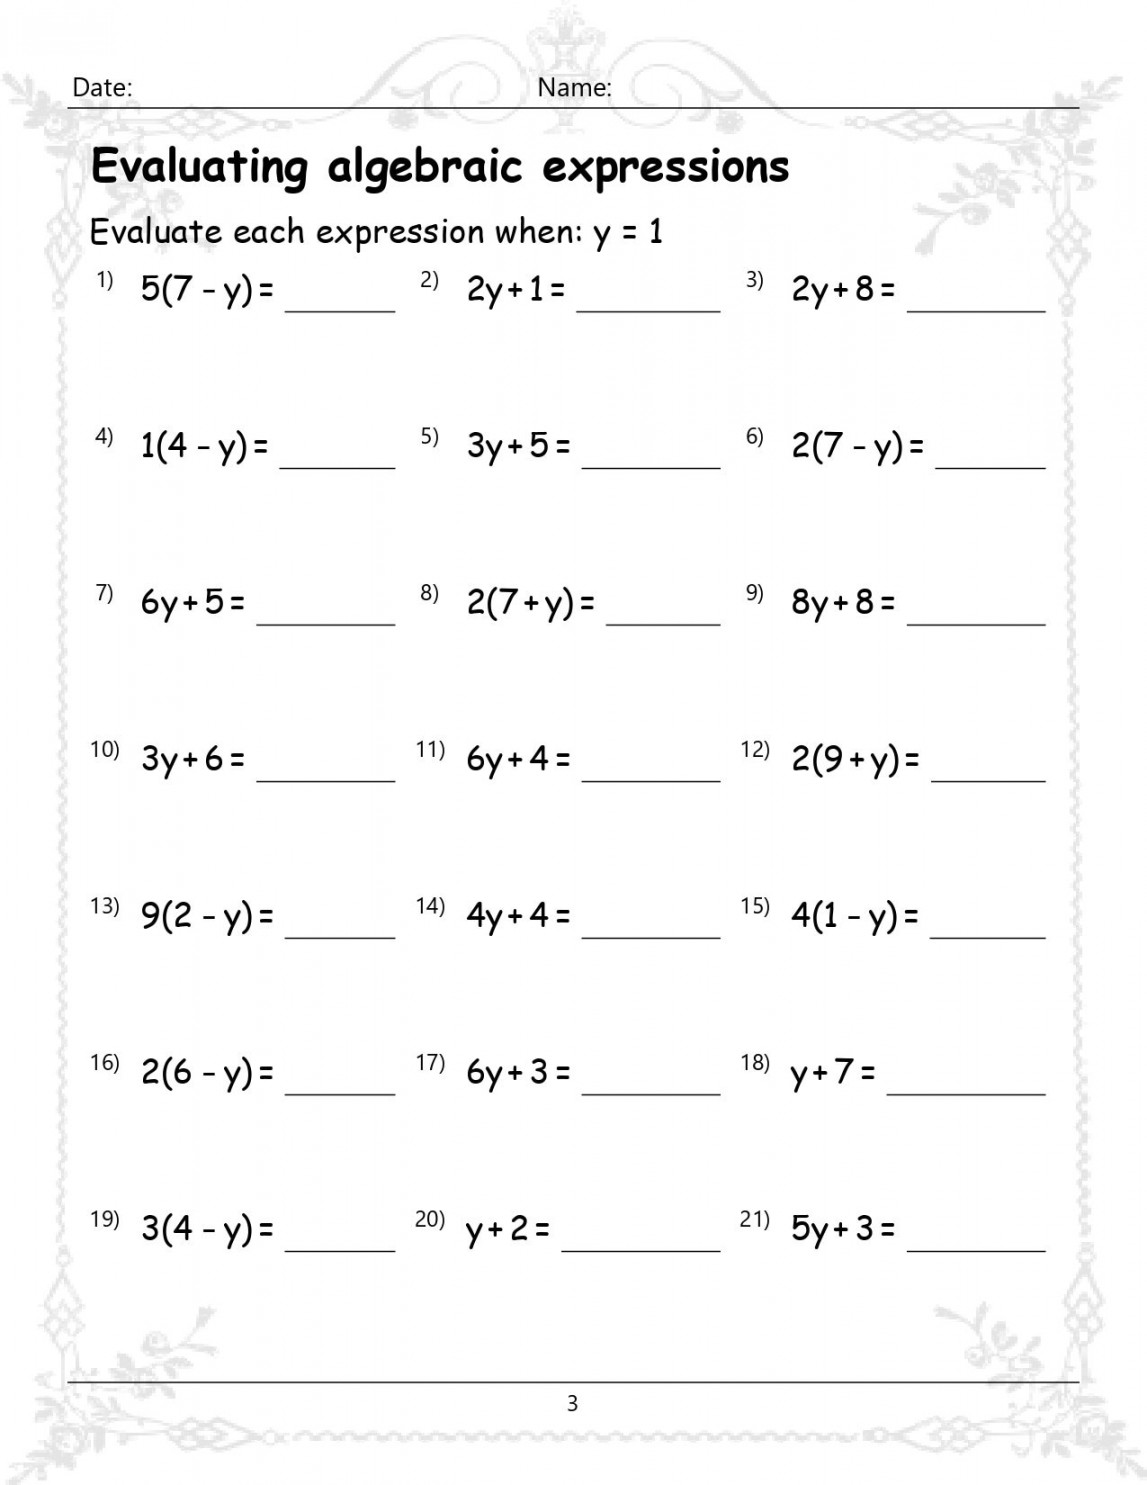 Evaluating Algebraic Expressions Worksheets th Grade - Etsy